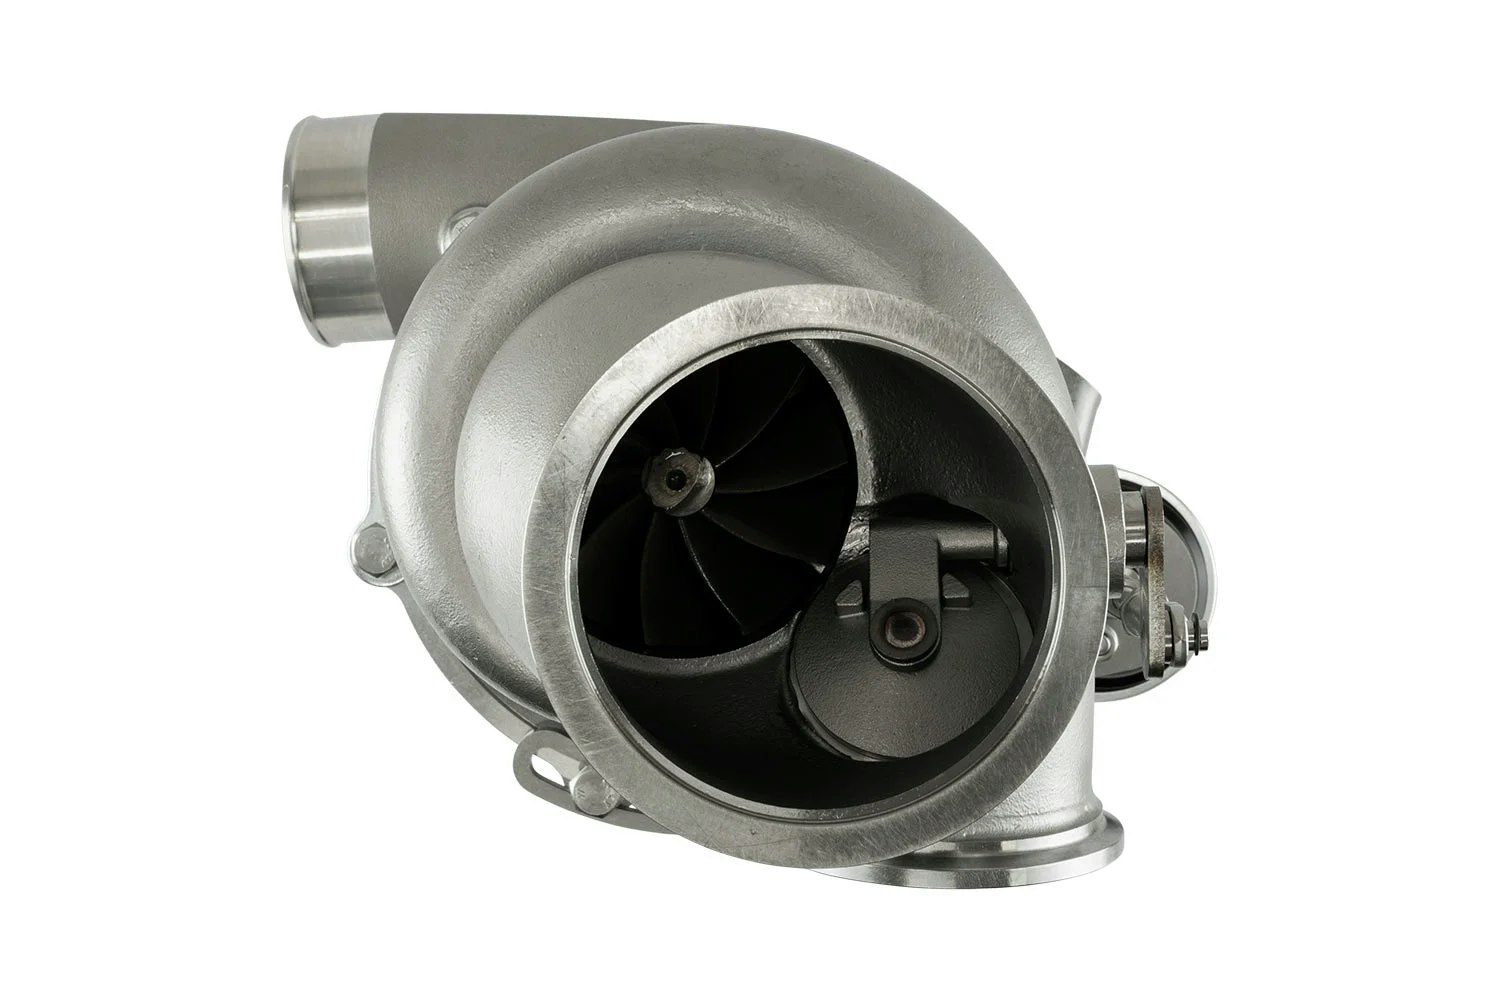 Turbosmart turbocharger 6262 V-Band/V-Band - internal wastegate, IWG75